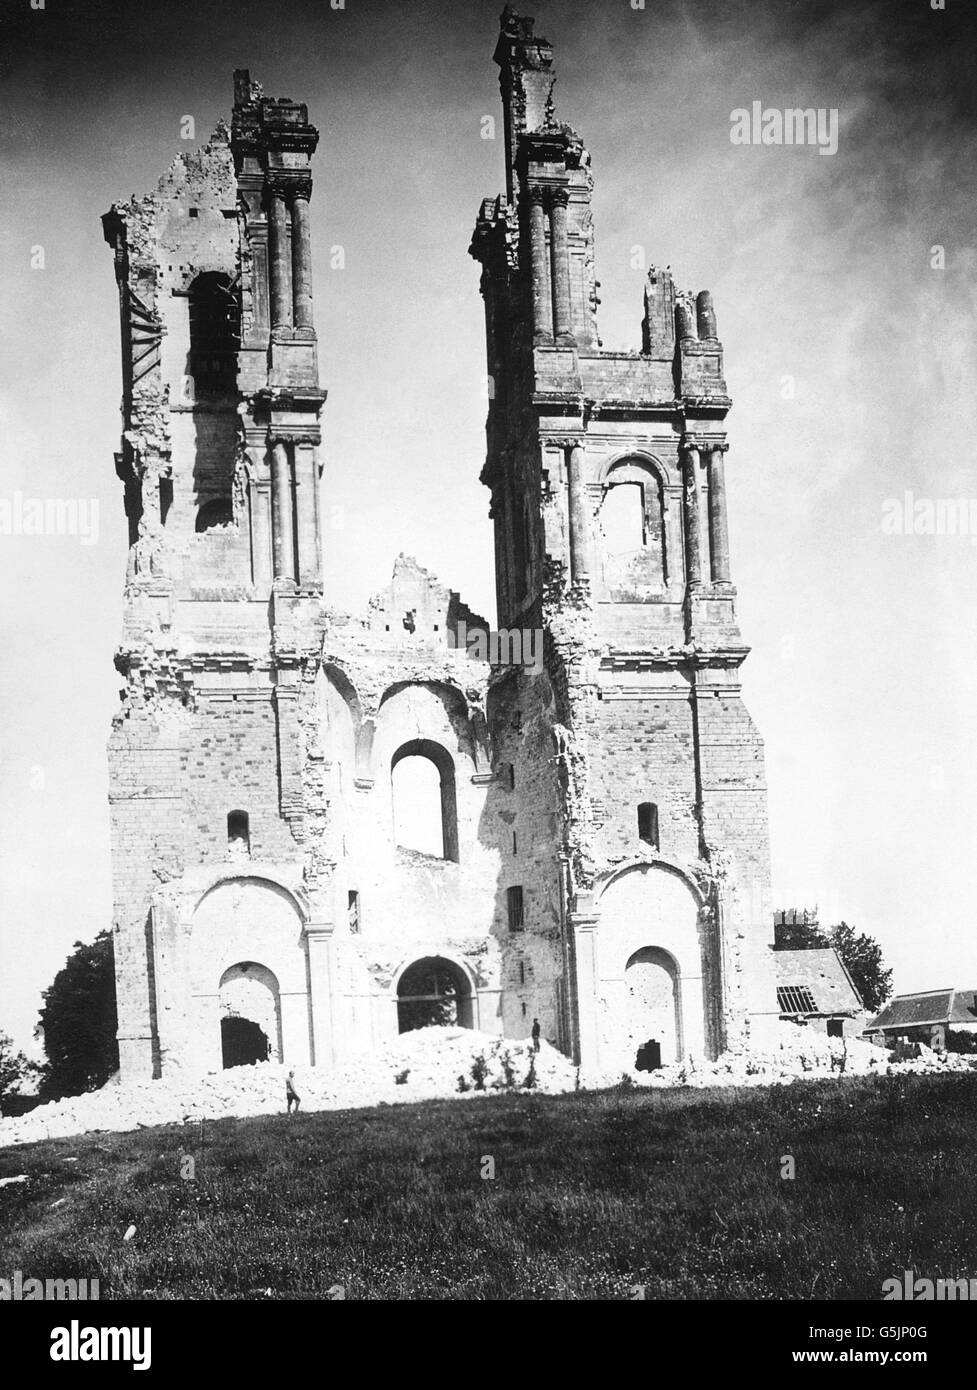 World War One - Tower of Mont-Saint-Eloi - France. The ruined tower of Mont-Saint-Eloi in France. Stock Photo